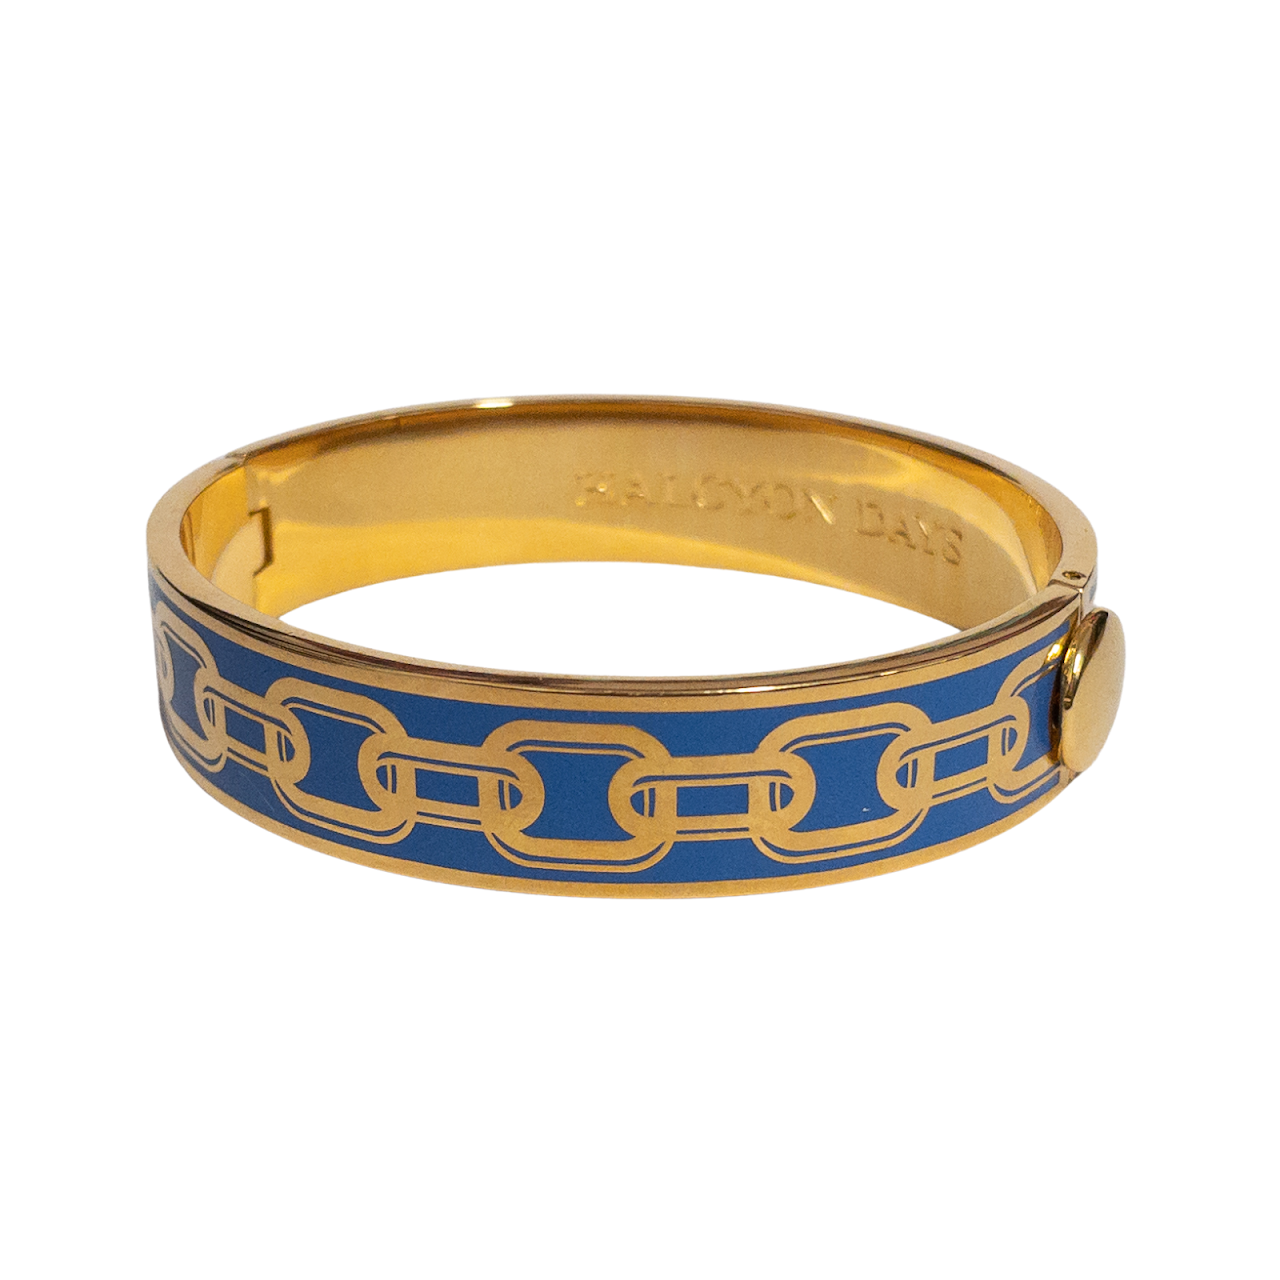 Halcyon Days Blue and Gold Chain Bangle Bracelet